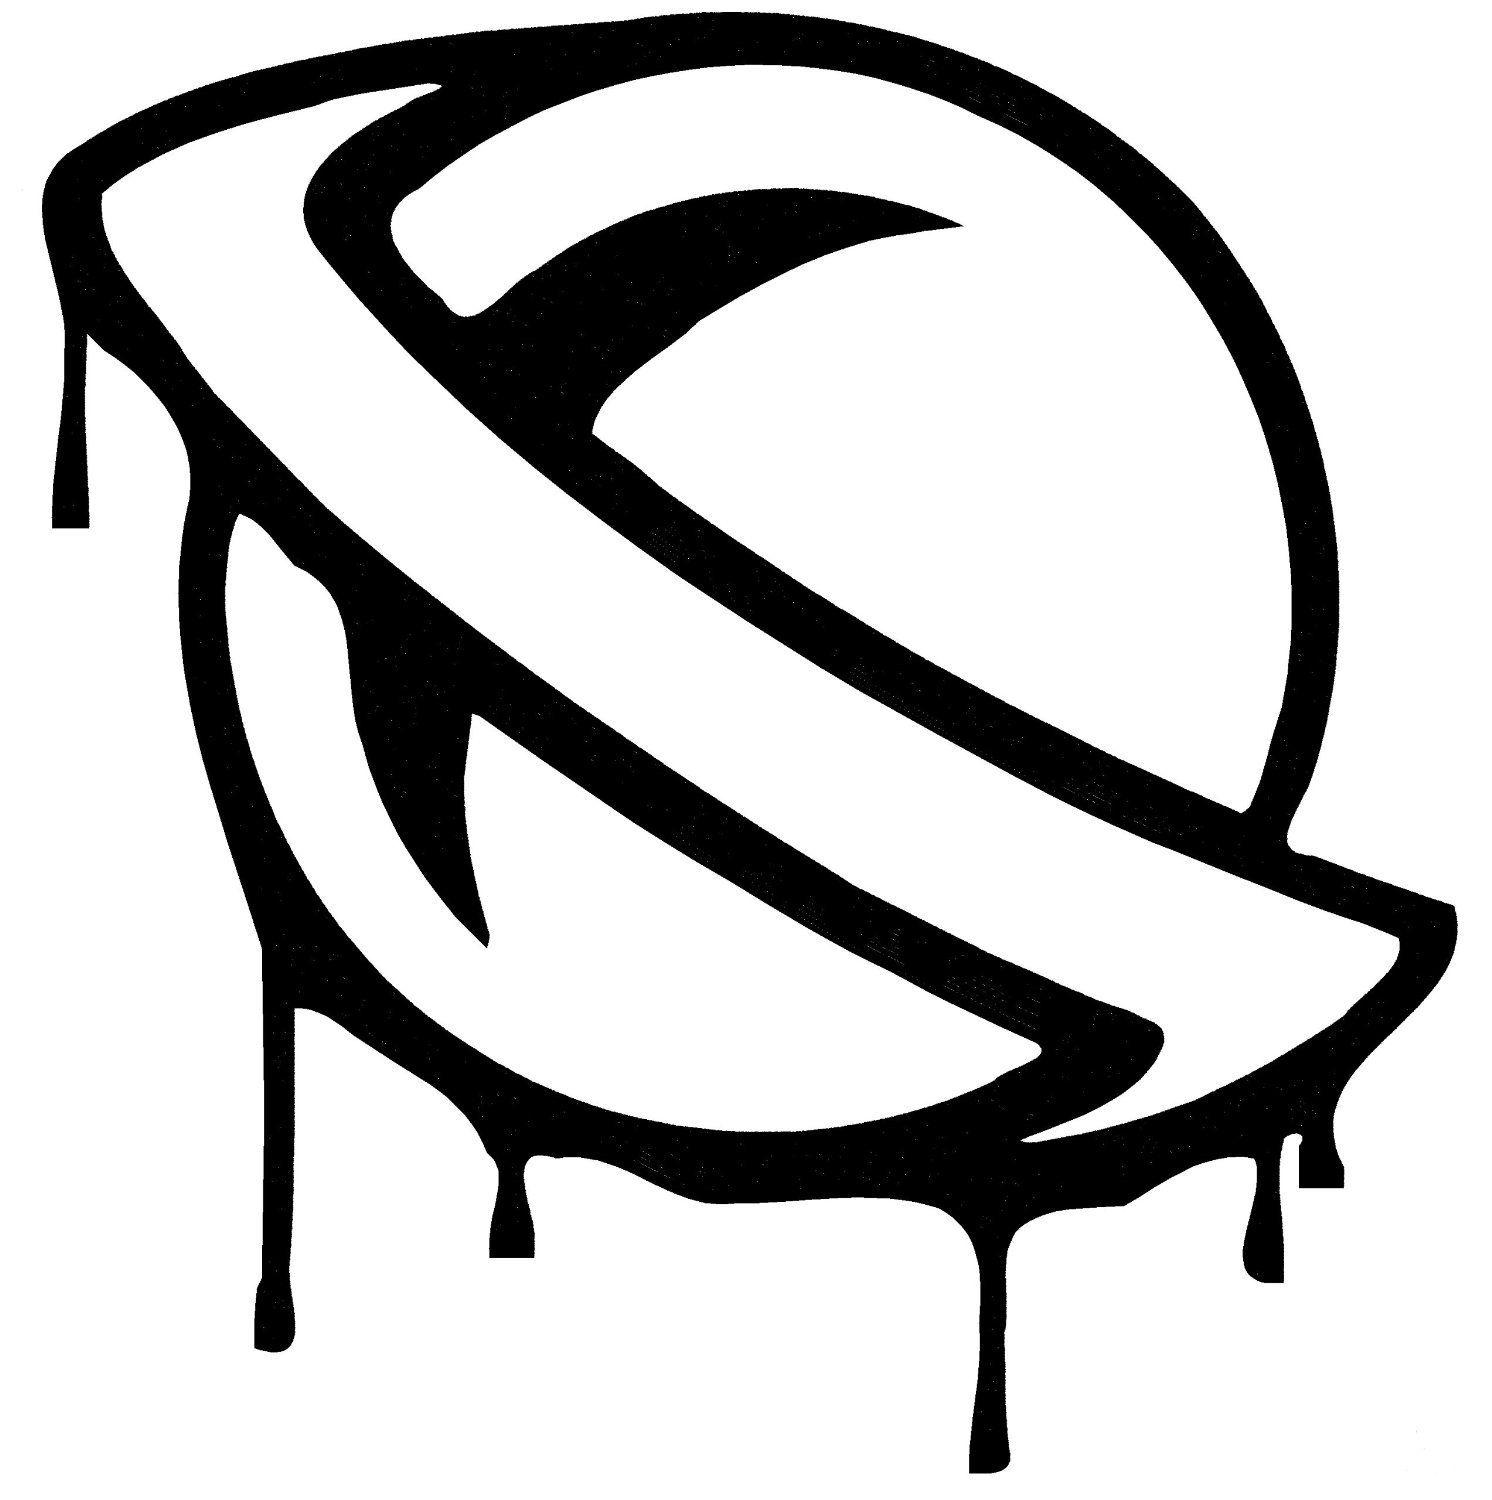 Black Globe Logo - Amazon.com: LOST SURF BOARD GLOBE LOGO VINYL STICKERS GECKO SYMBOL ...